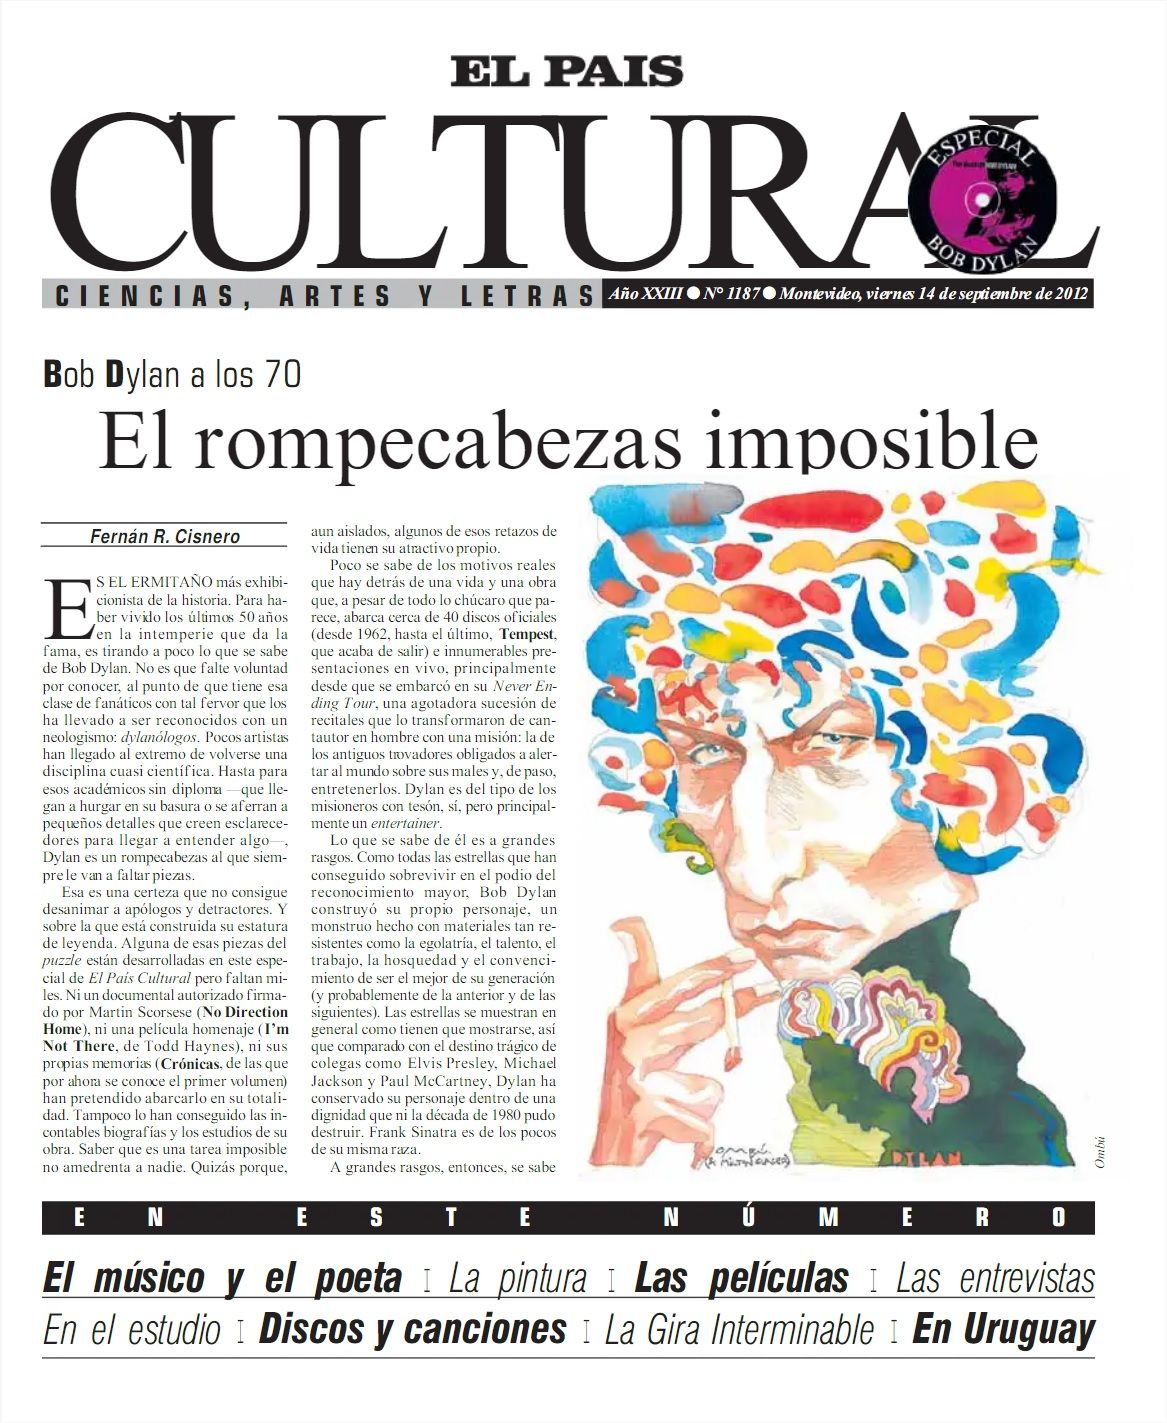 el pais cultural magazine 2012 Bob Dylan front cover